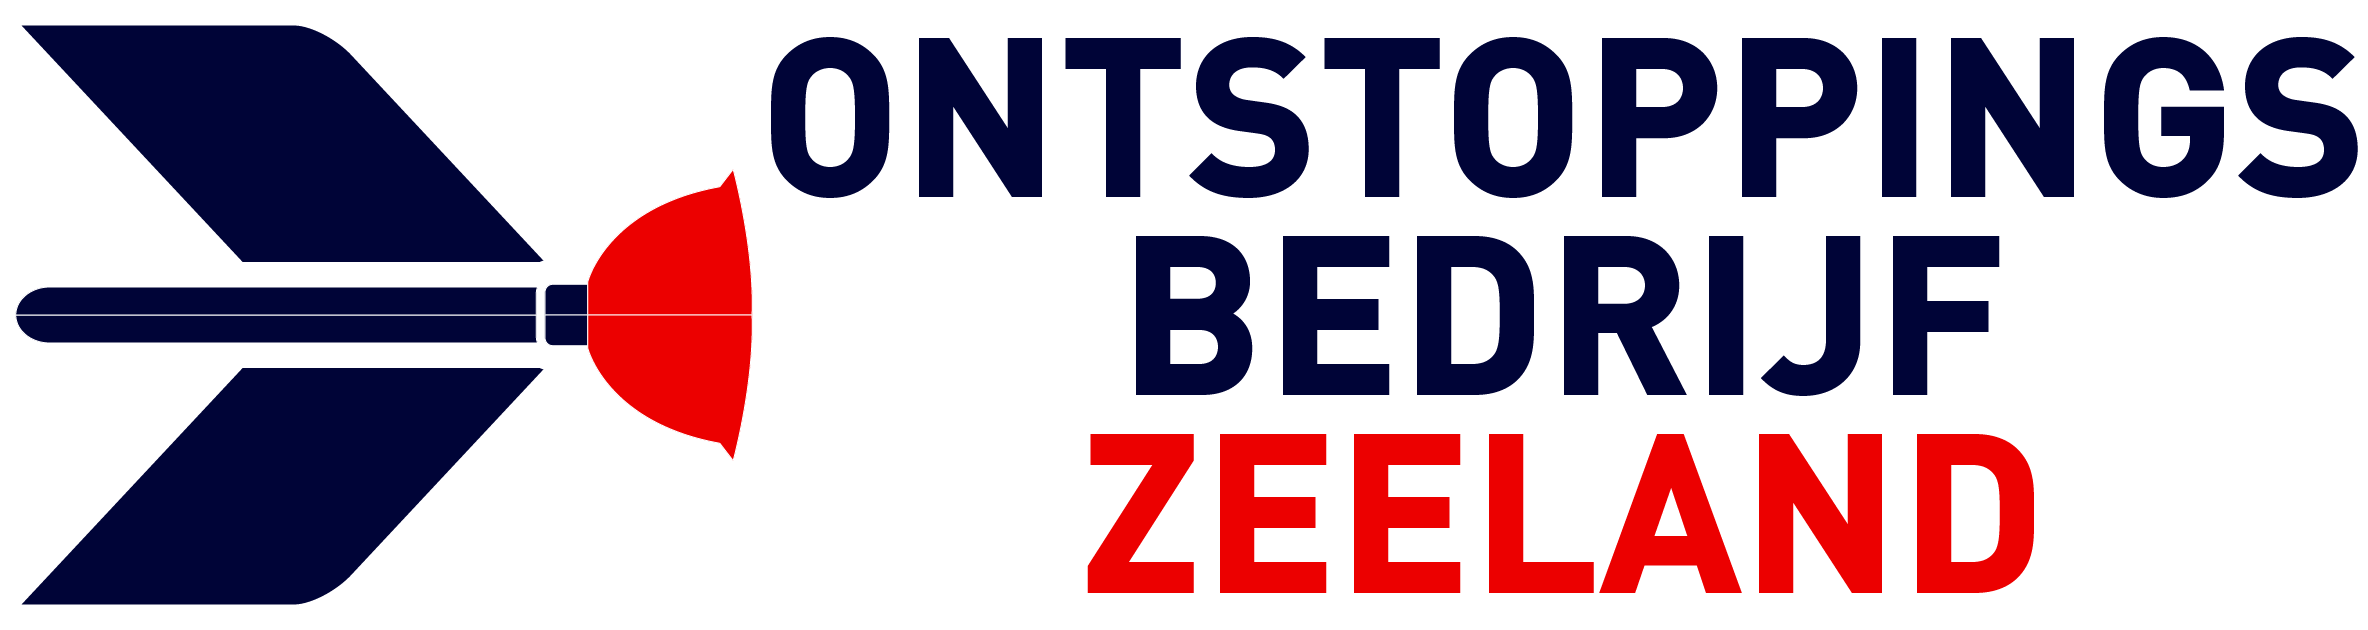 Ontstoppingsbedrijf Zeeland logo